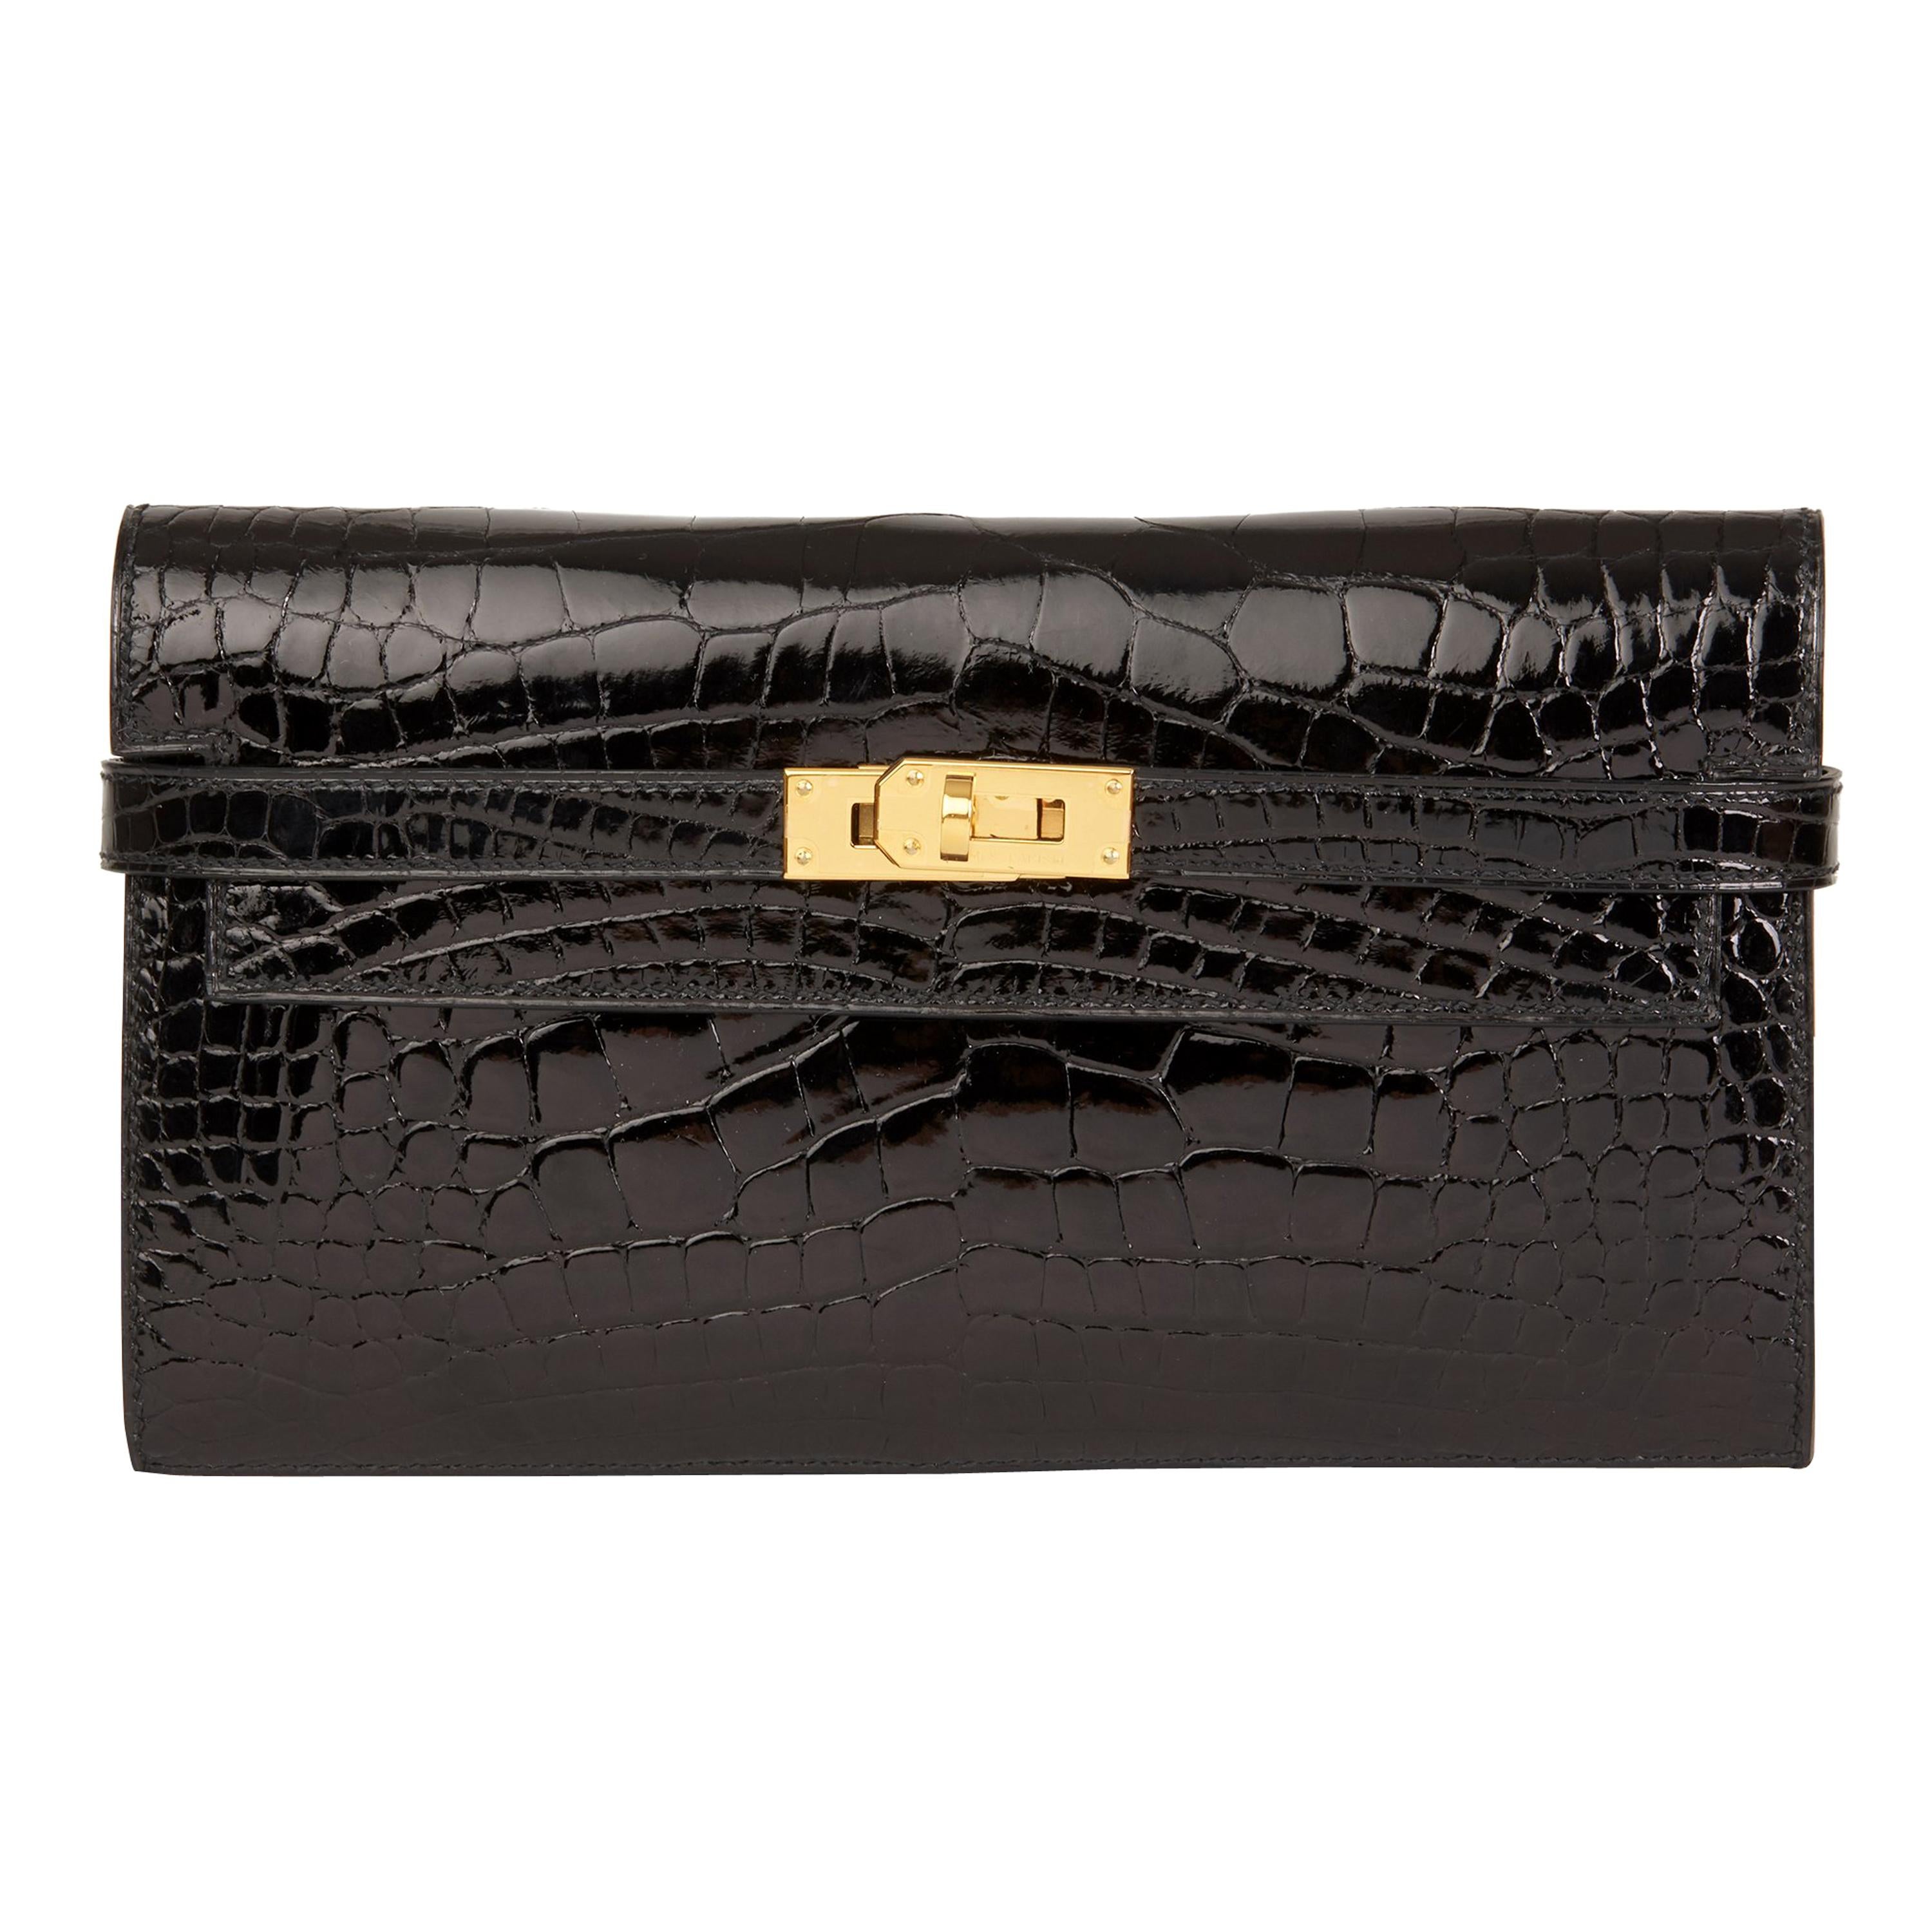 2017 Hermès Black Shiny Mississippiensis Alligator Leather Kelly Long Wallet 